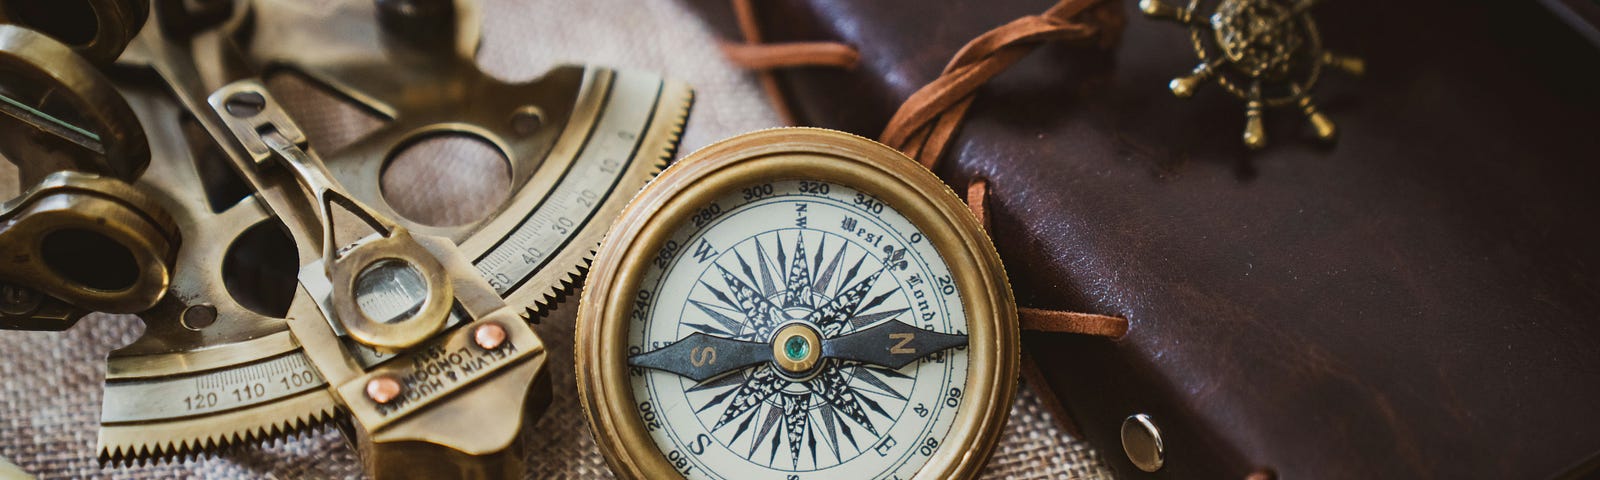 compass among other navigation tools: spyglass, sextant, shops log.